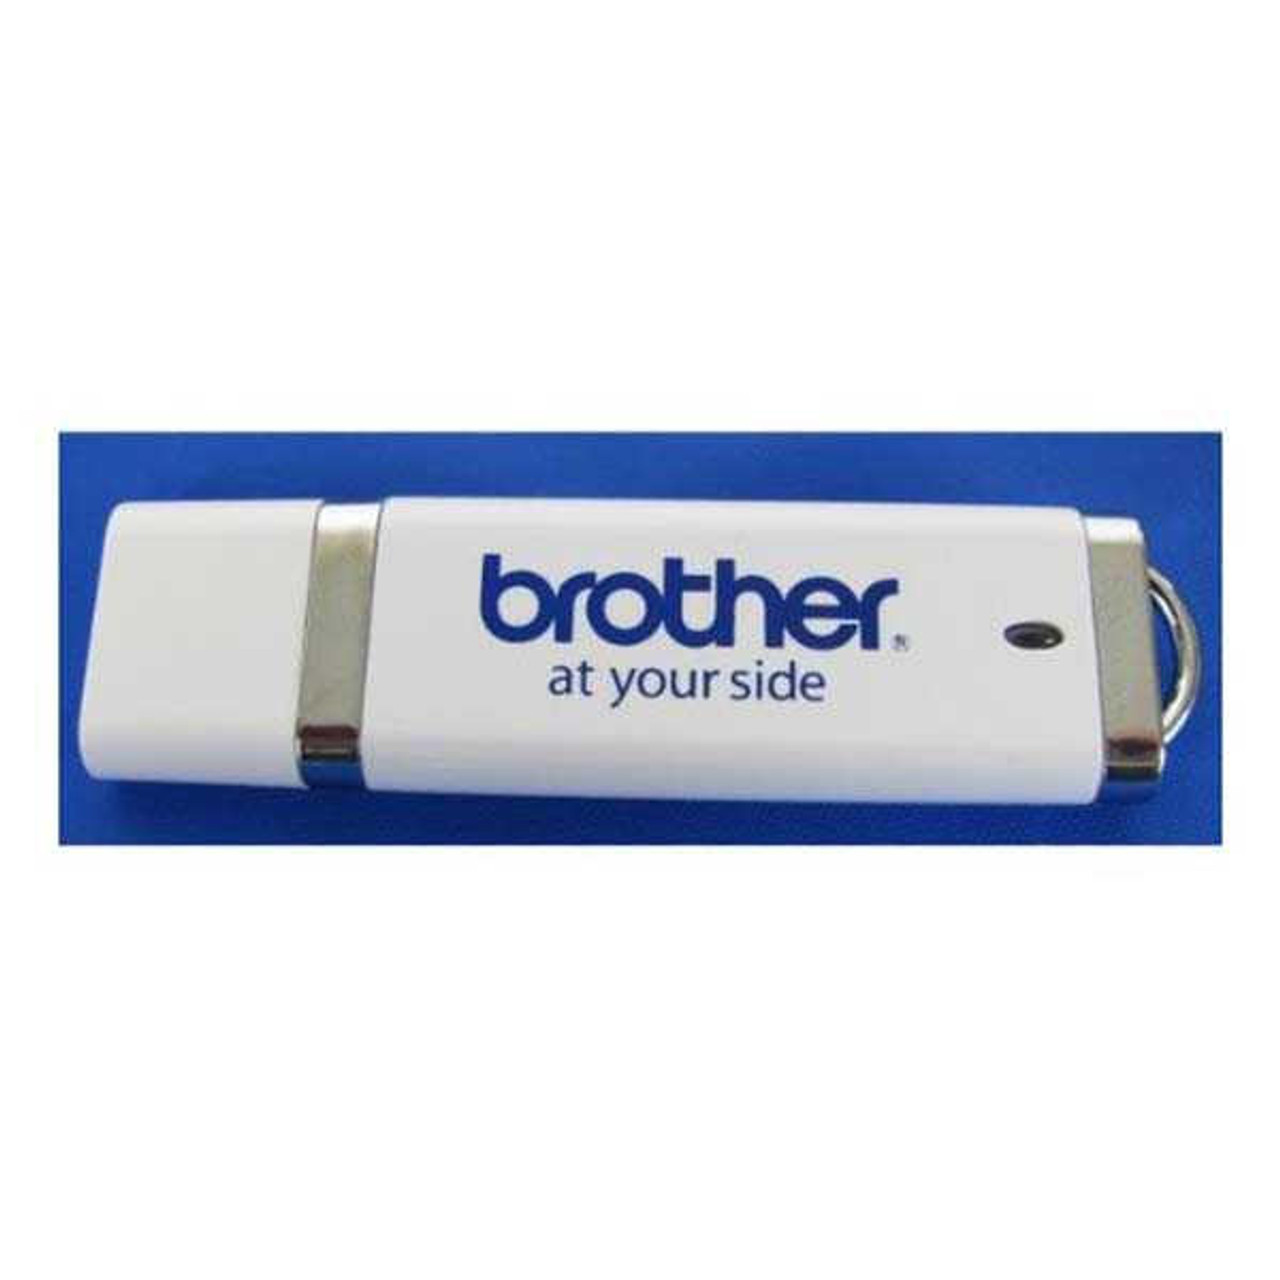 Brother USB Memory Stick